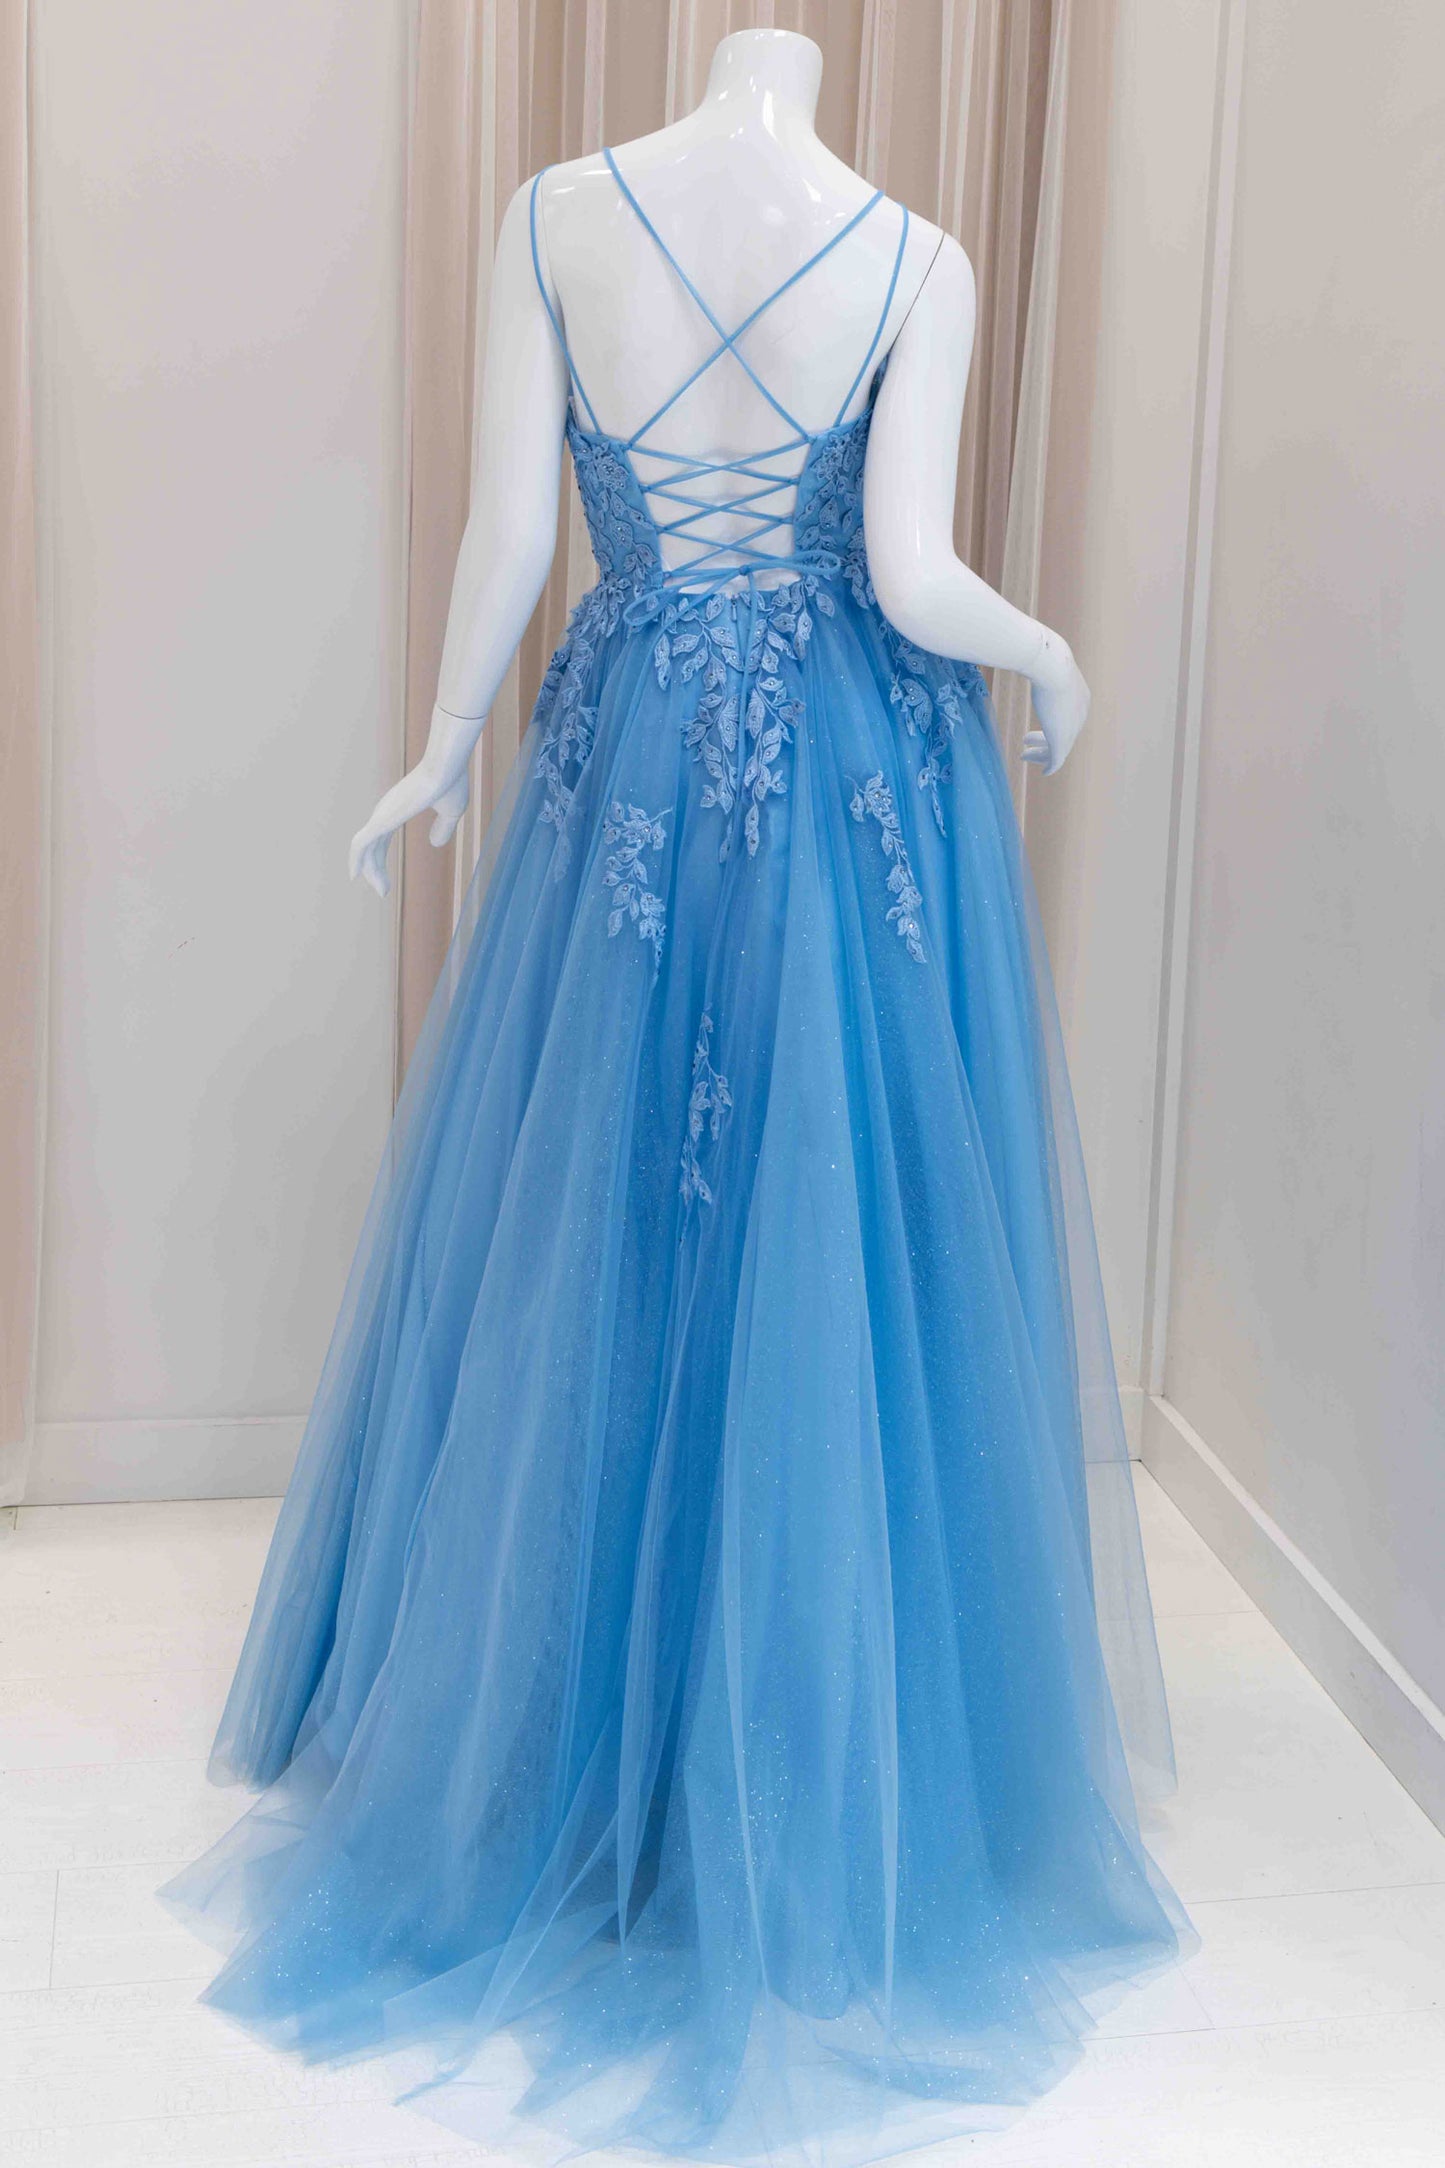 Isolda 3D Applique Ball Gown in Powder Blue